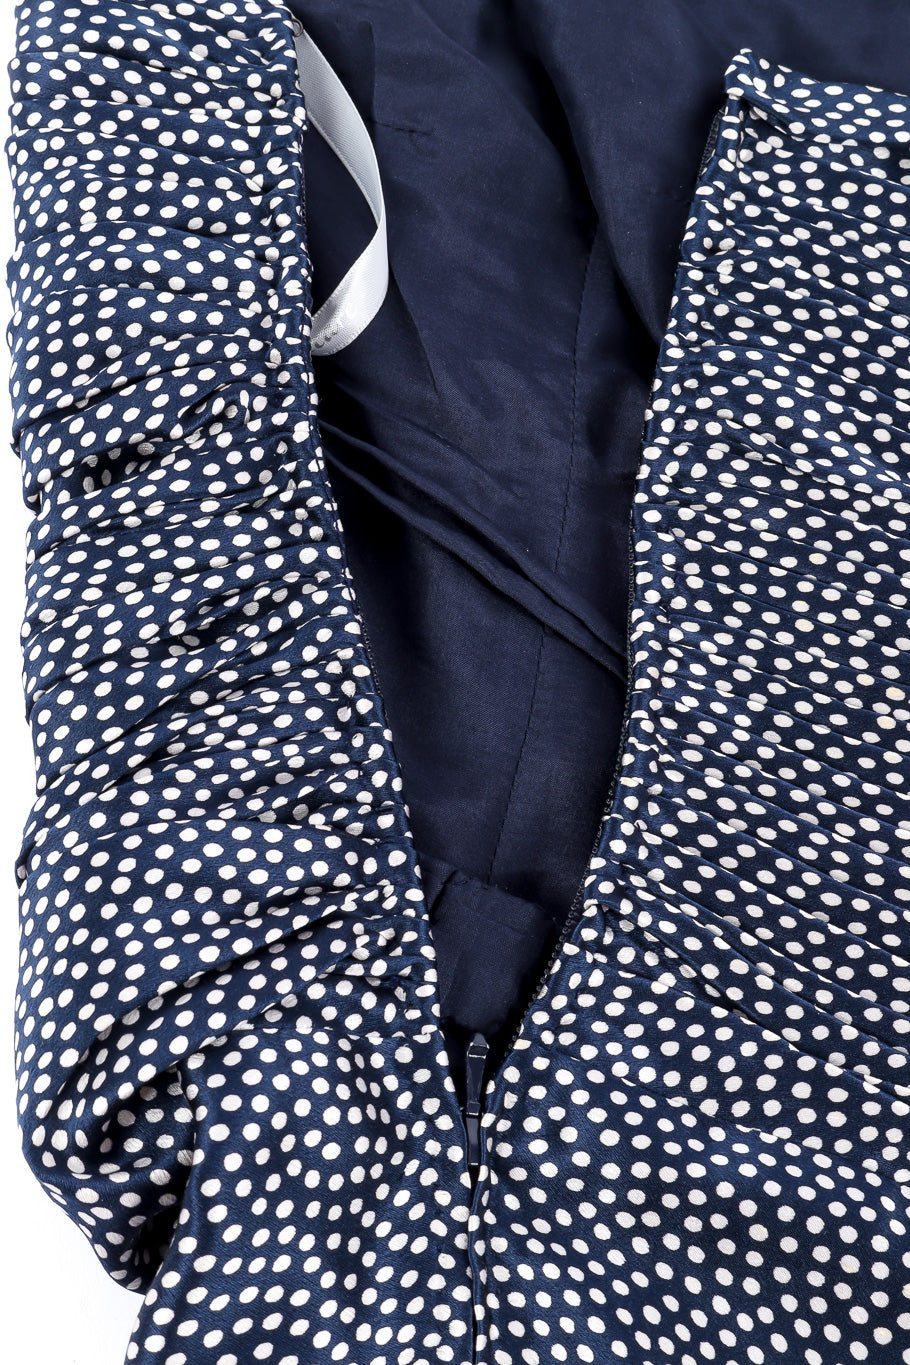 Jaqueline de Ribes polka dot dress side zipper @recessla